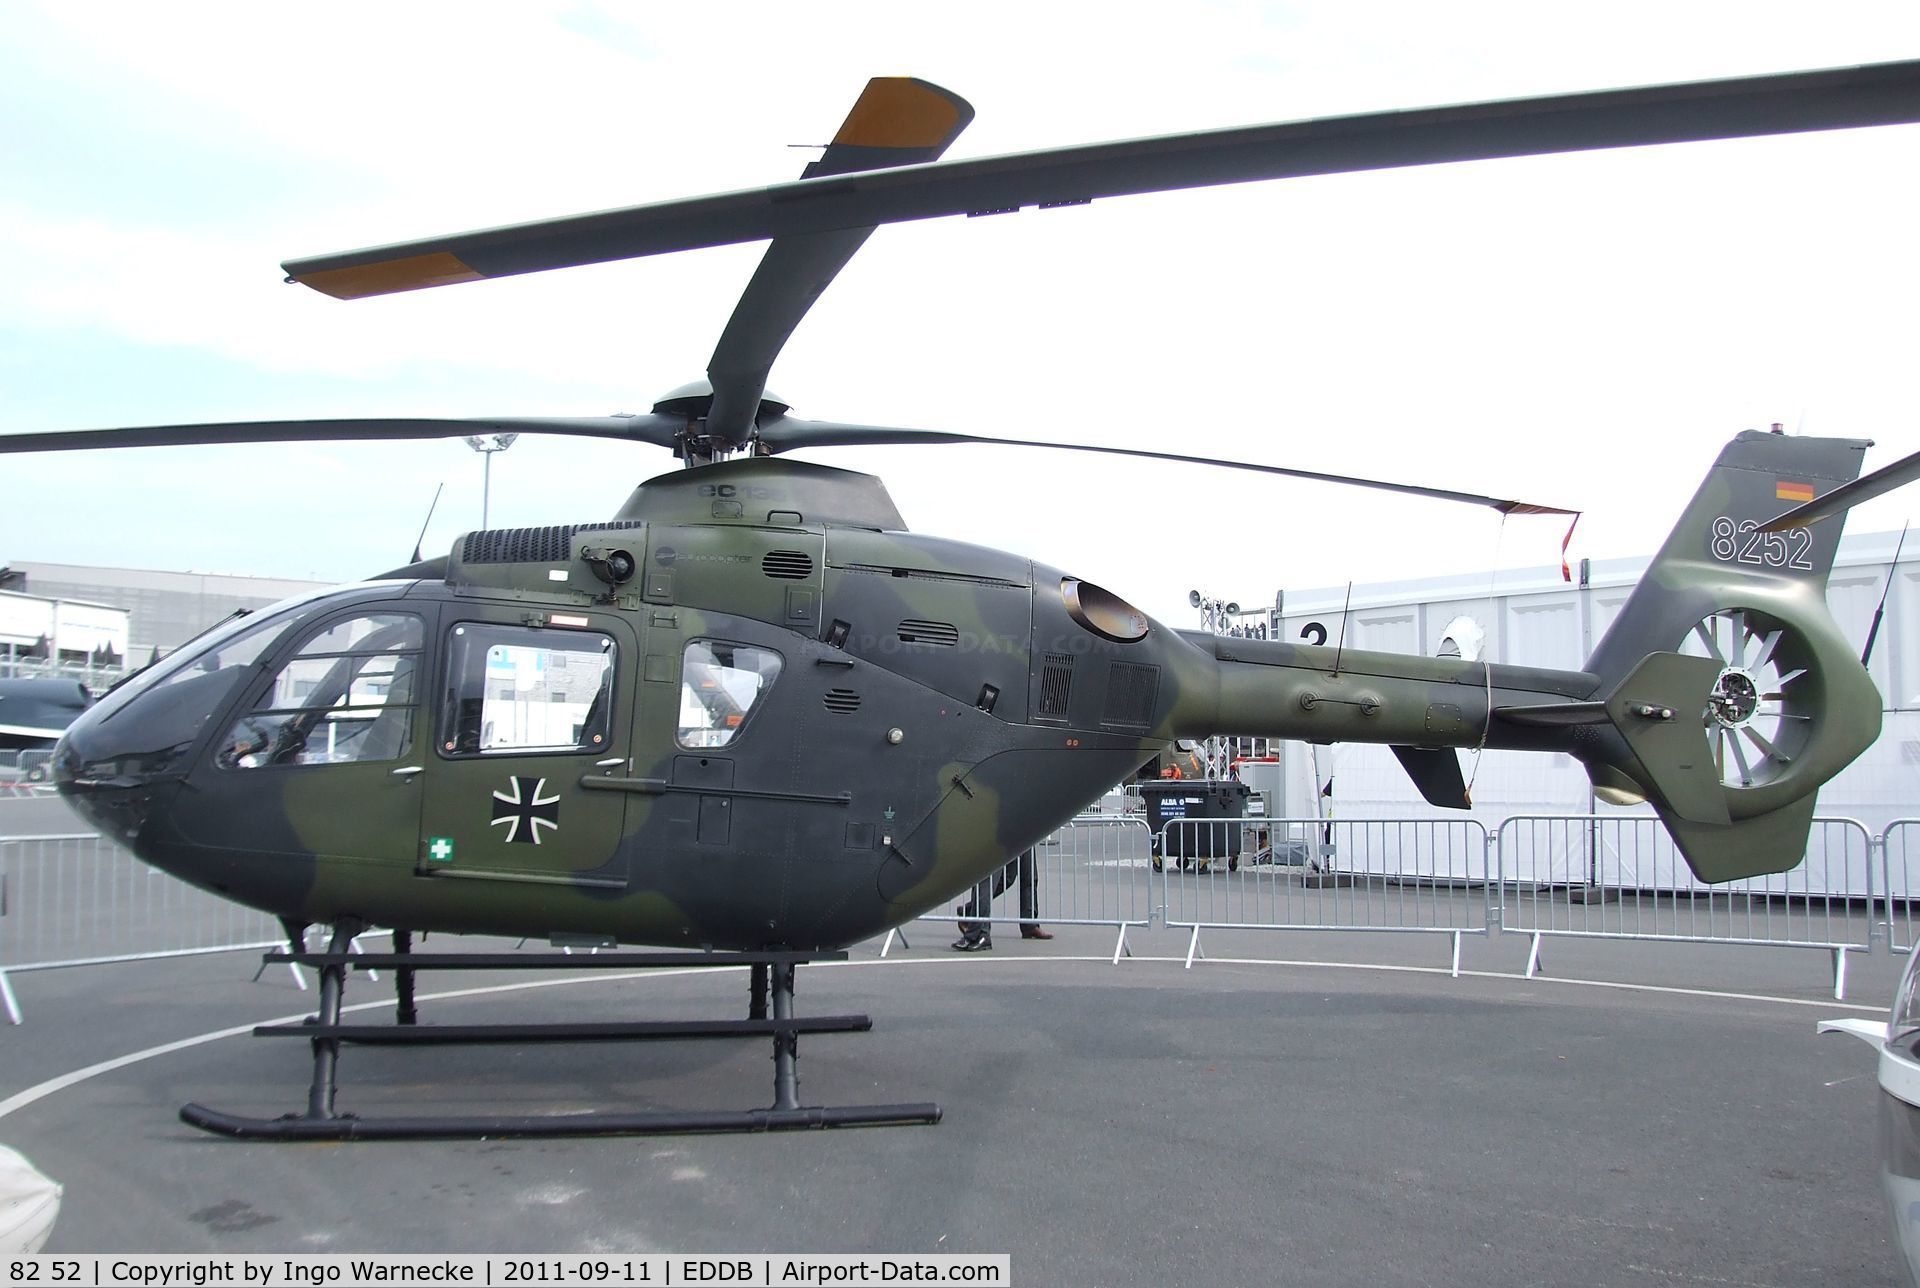 82 52, 2000 Eurocopter EC-135T-1 C/N 0093, Eurocopter EC135T-1 of the German army (Heeresflieger) at the ILA 2012, Berlin